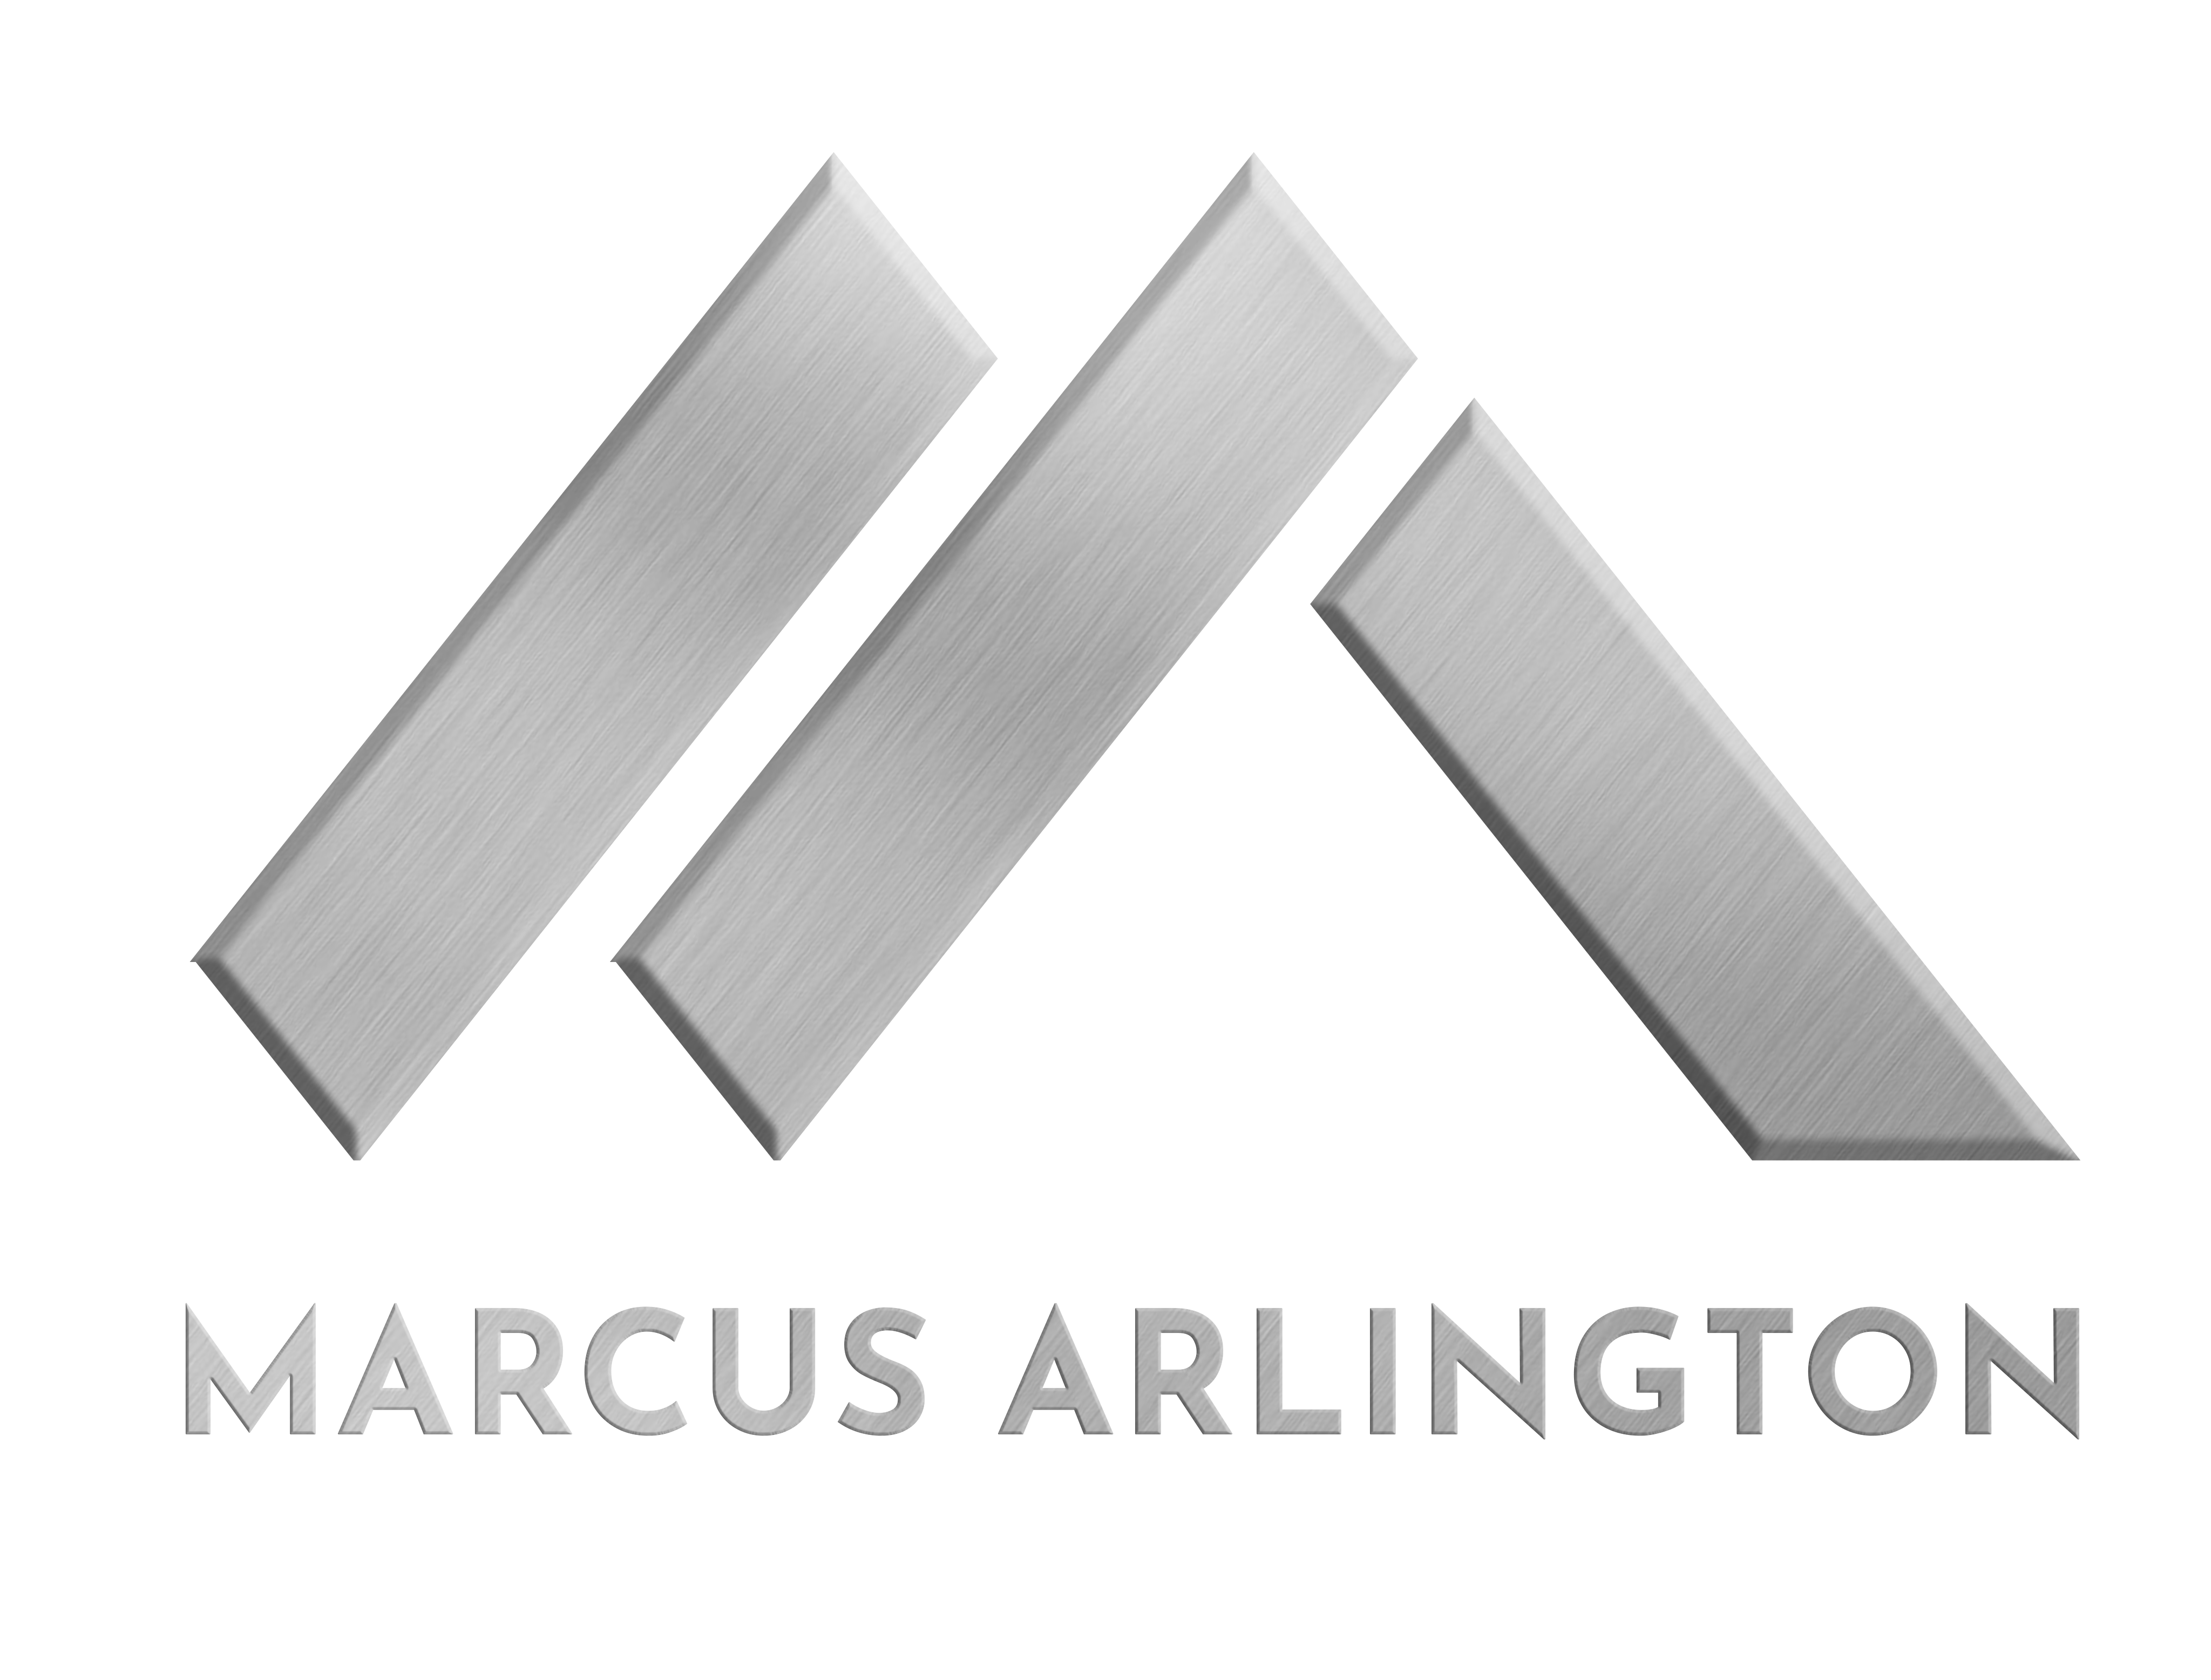 Marcus Arlington - Logo with Text